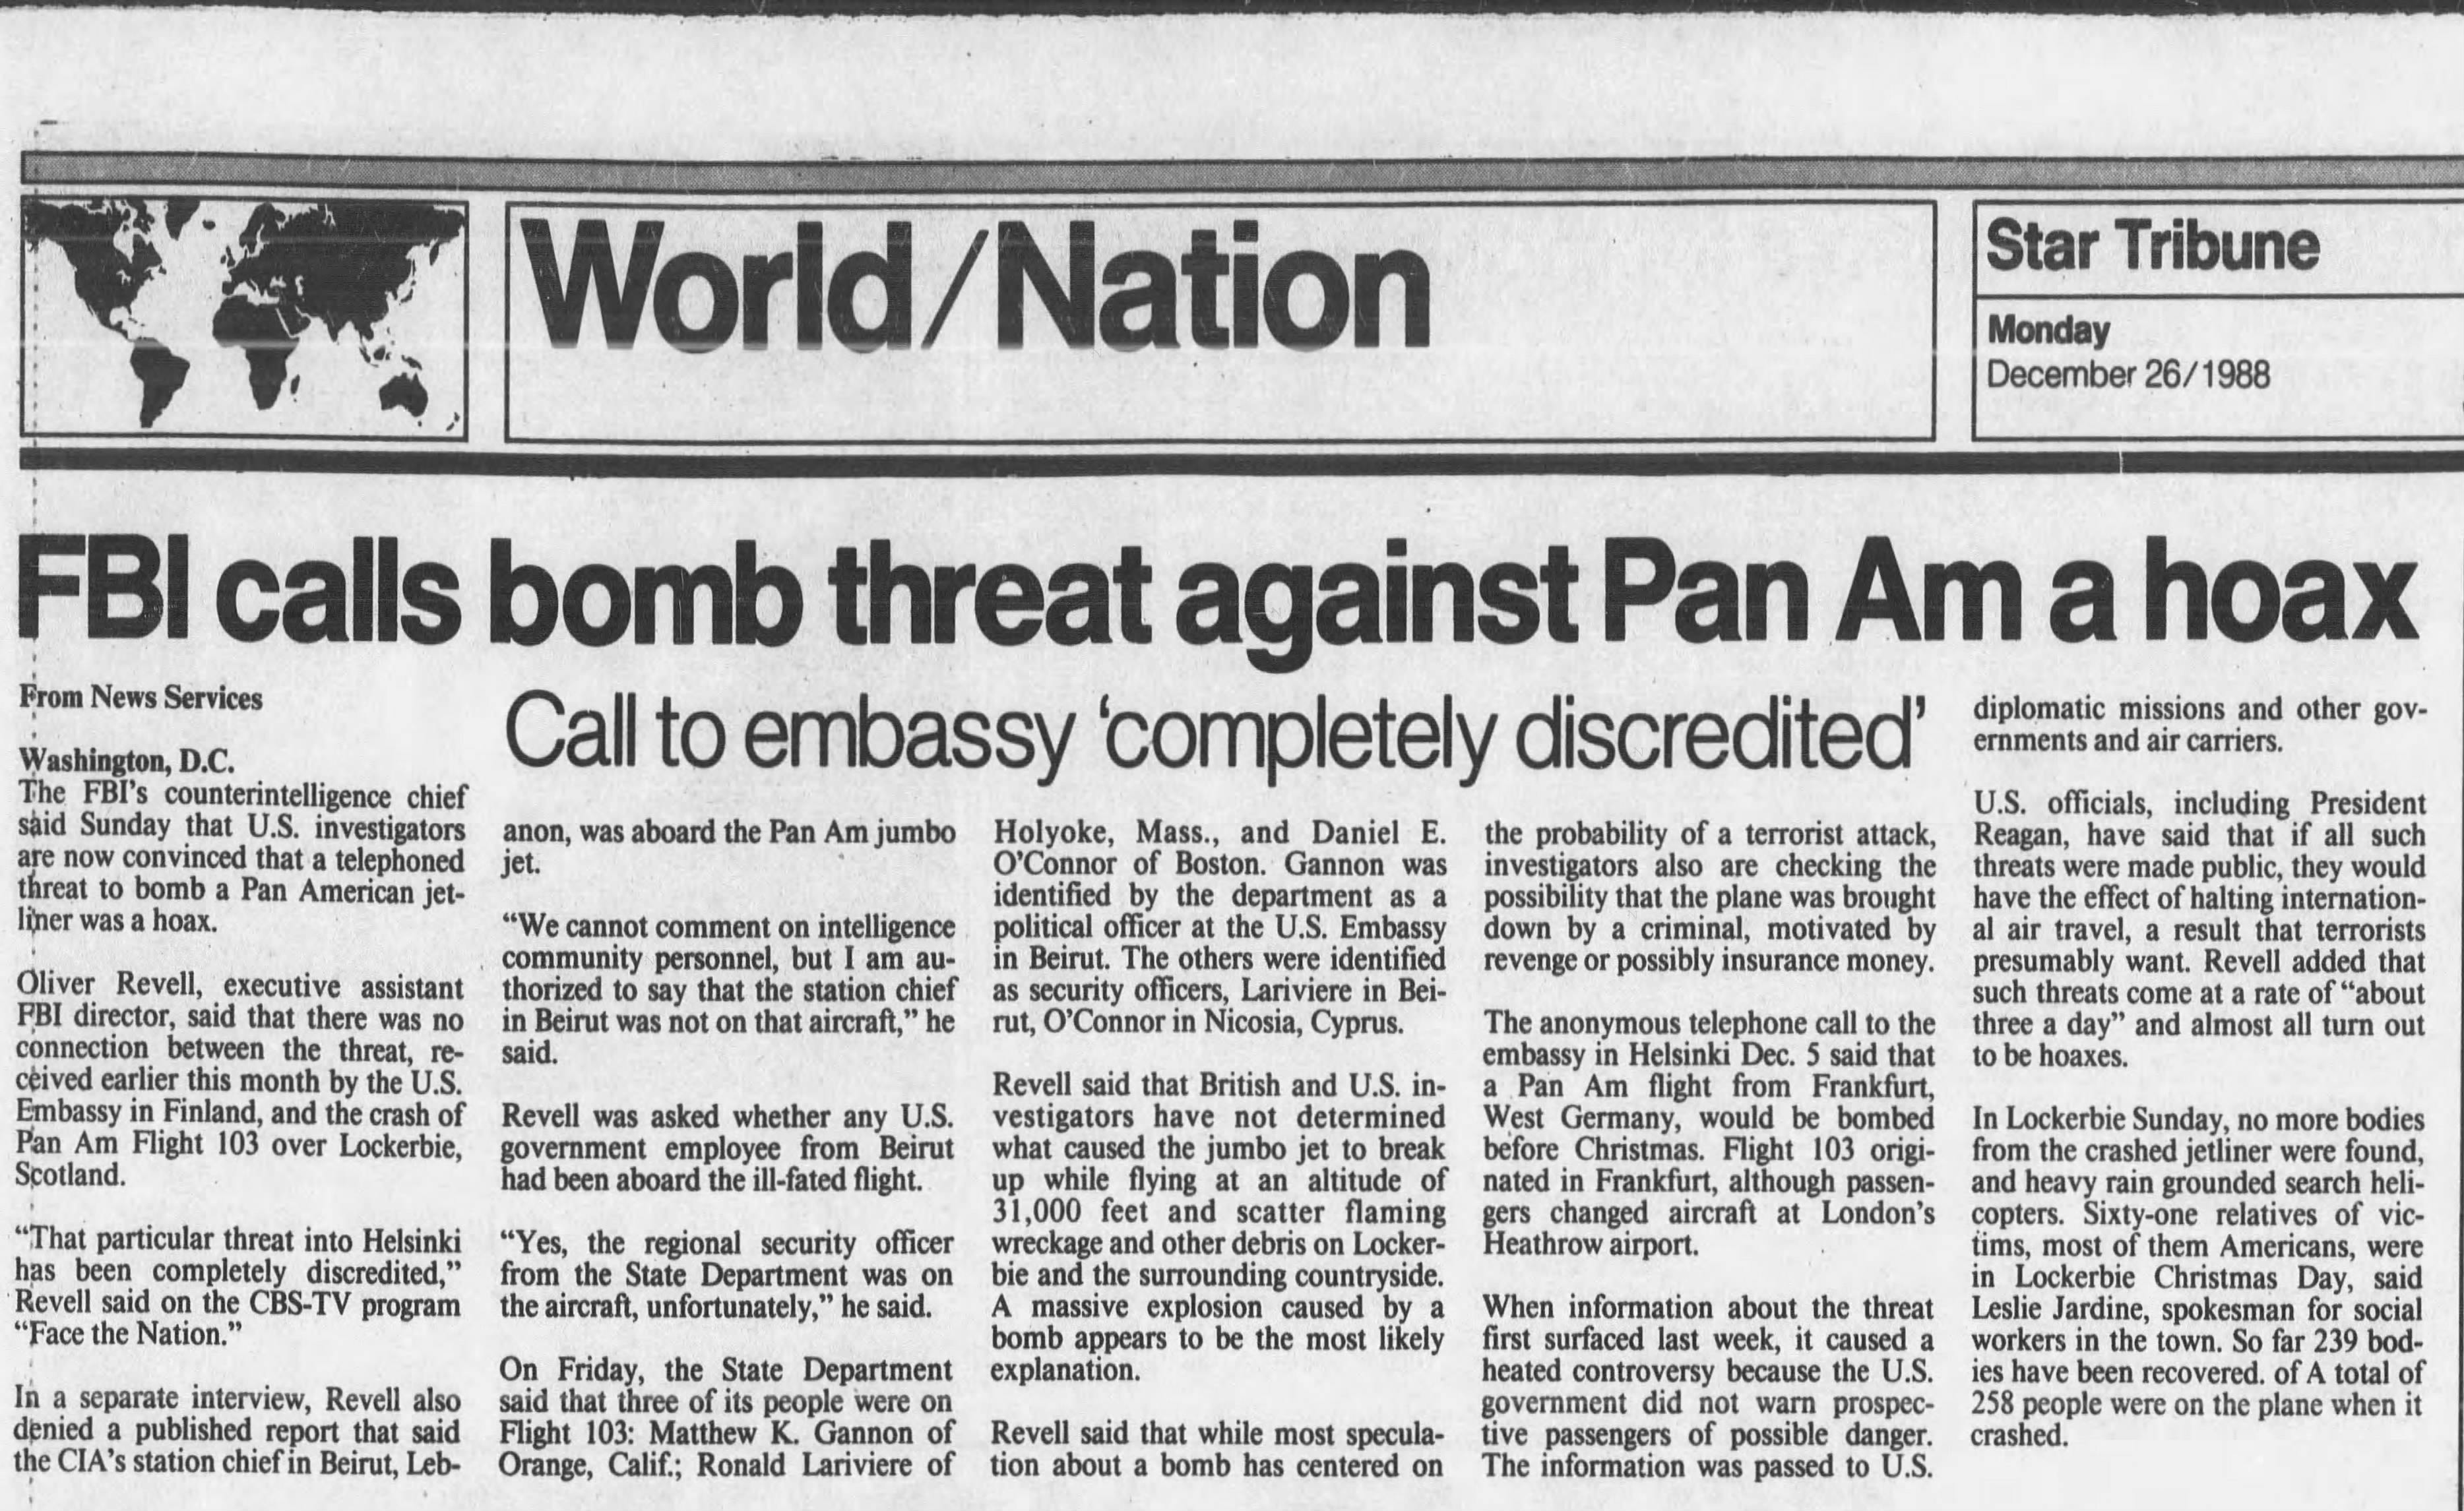 19881226_star-tribune_fbi-calls-bomb-threat-against-pan-am-a-hoax.jpg